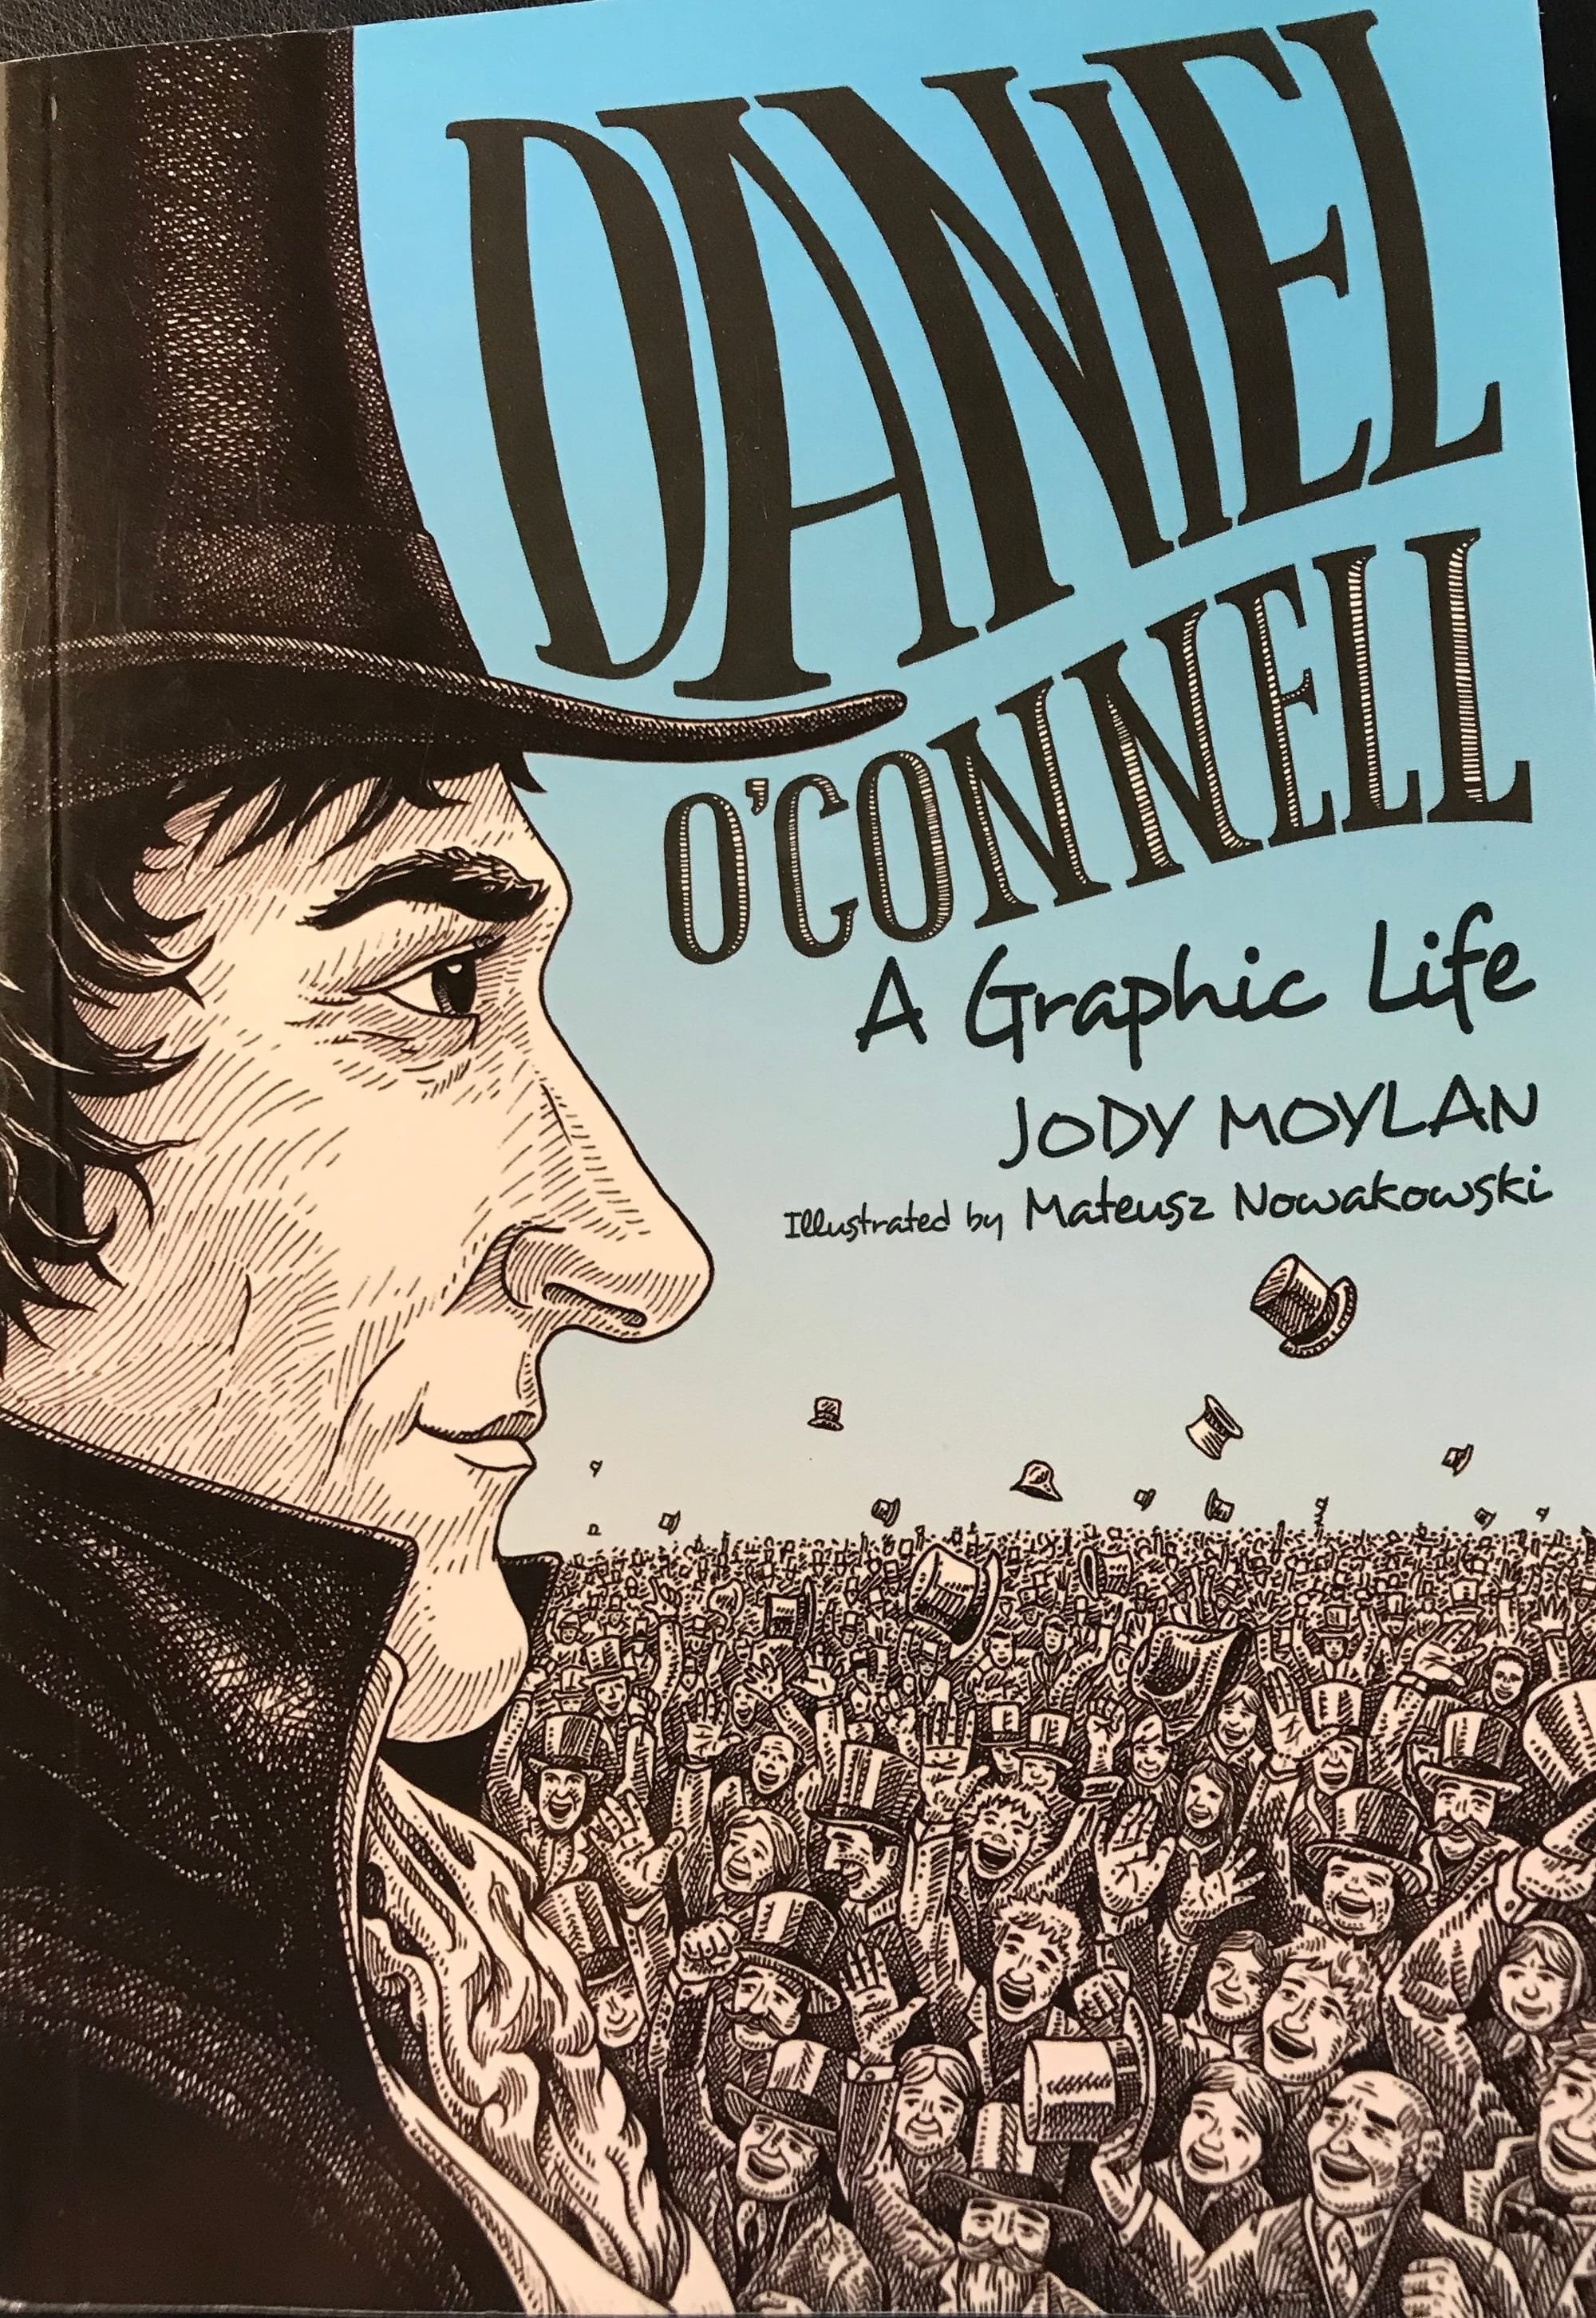 Daniel O’Connell - A Graphic Life